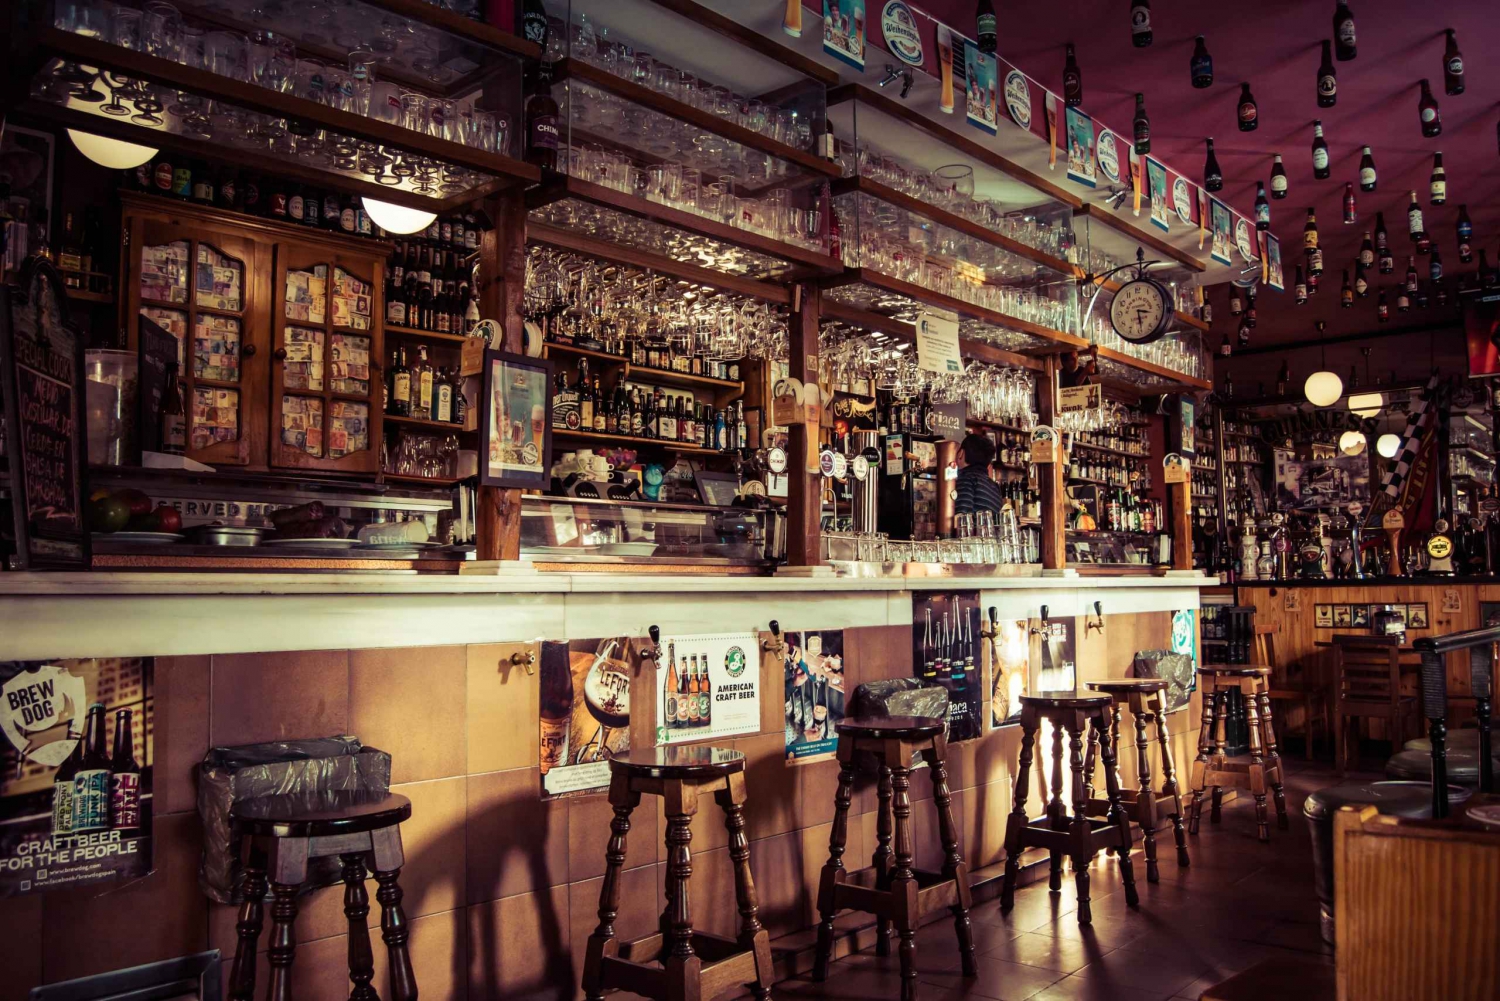 Madrid: Historical Restaurants and Bars Tour